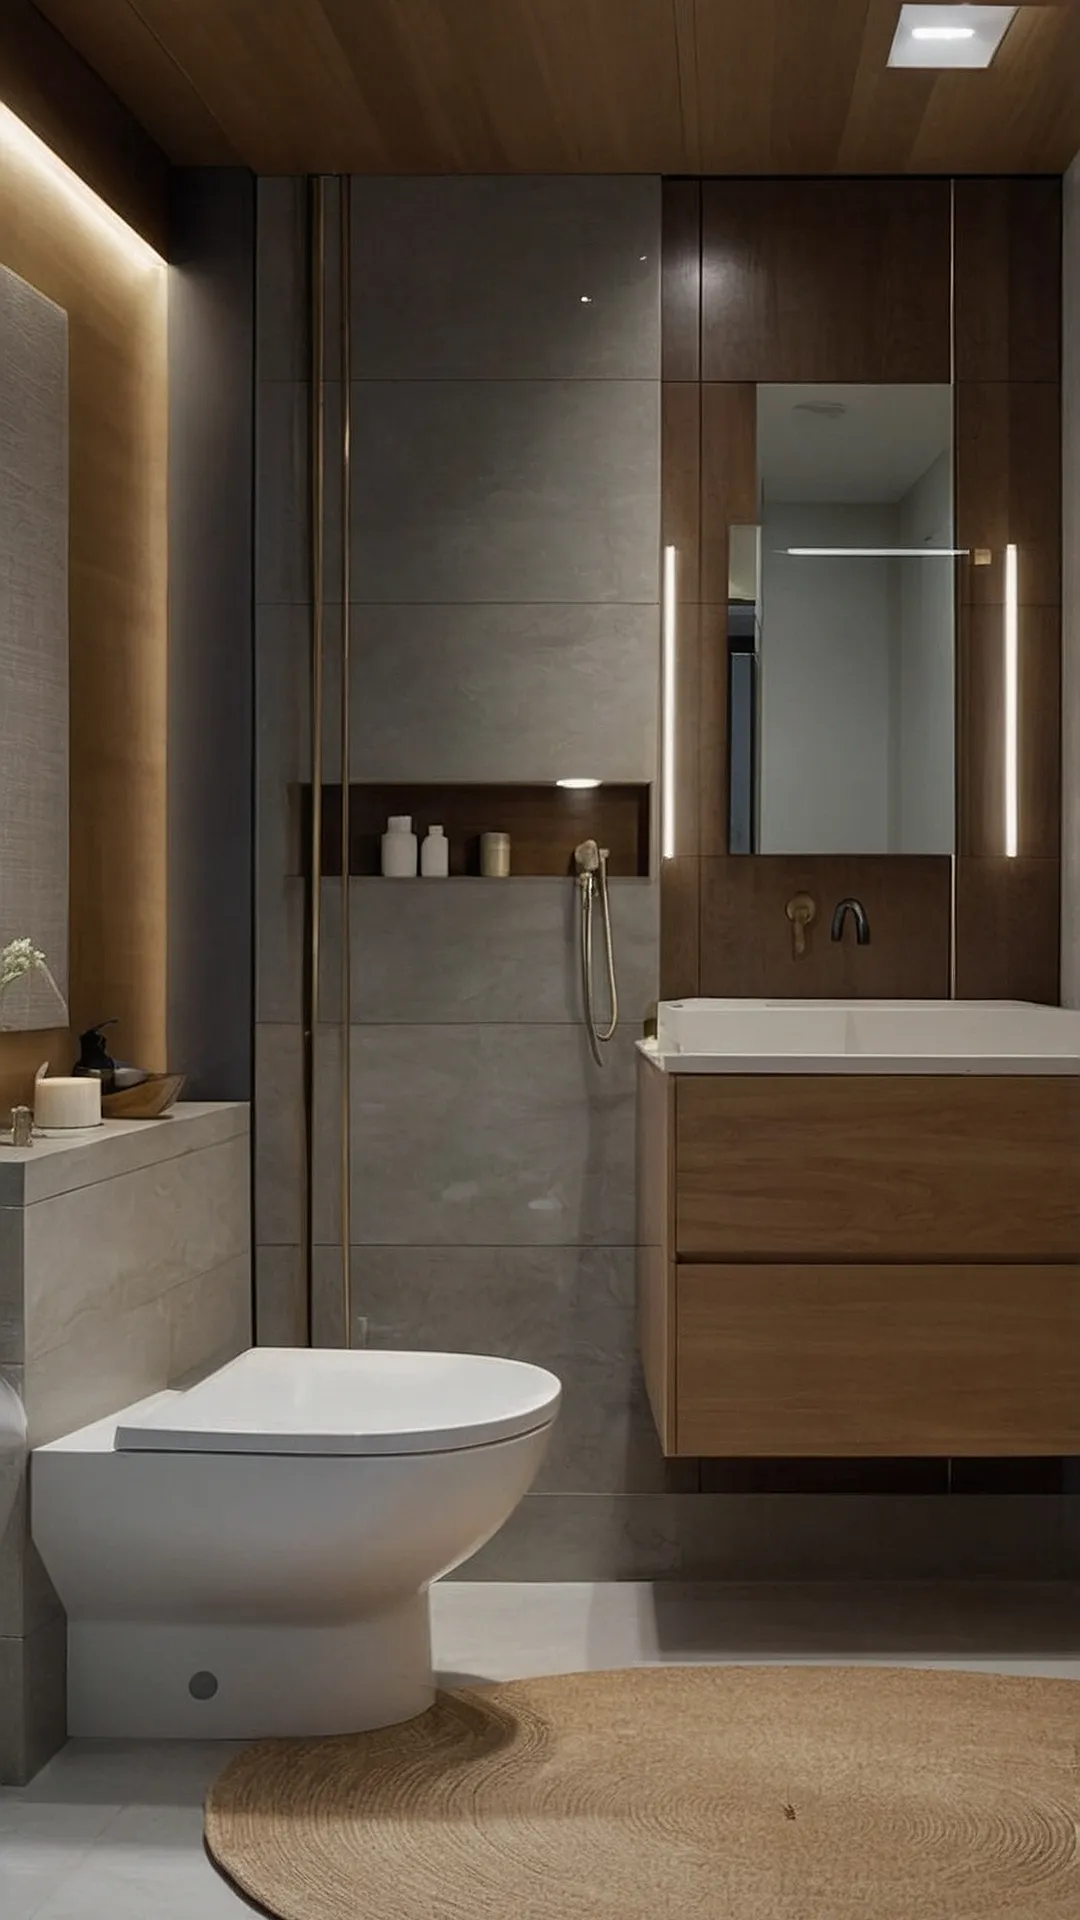 Sleek and Stylish: Modern Bathroom Designs